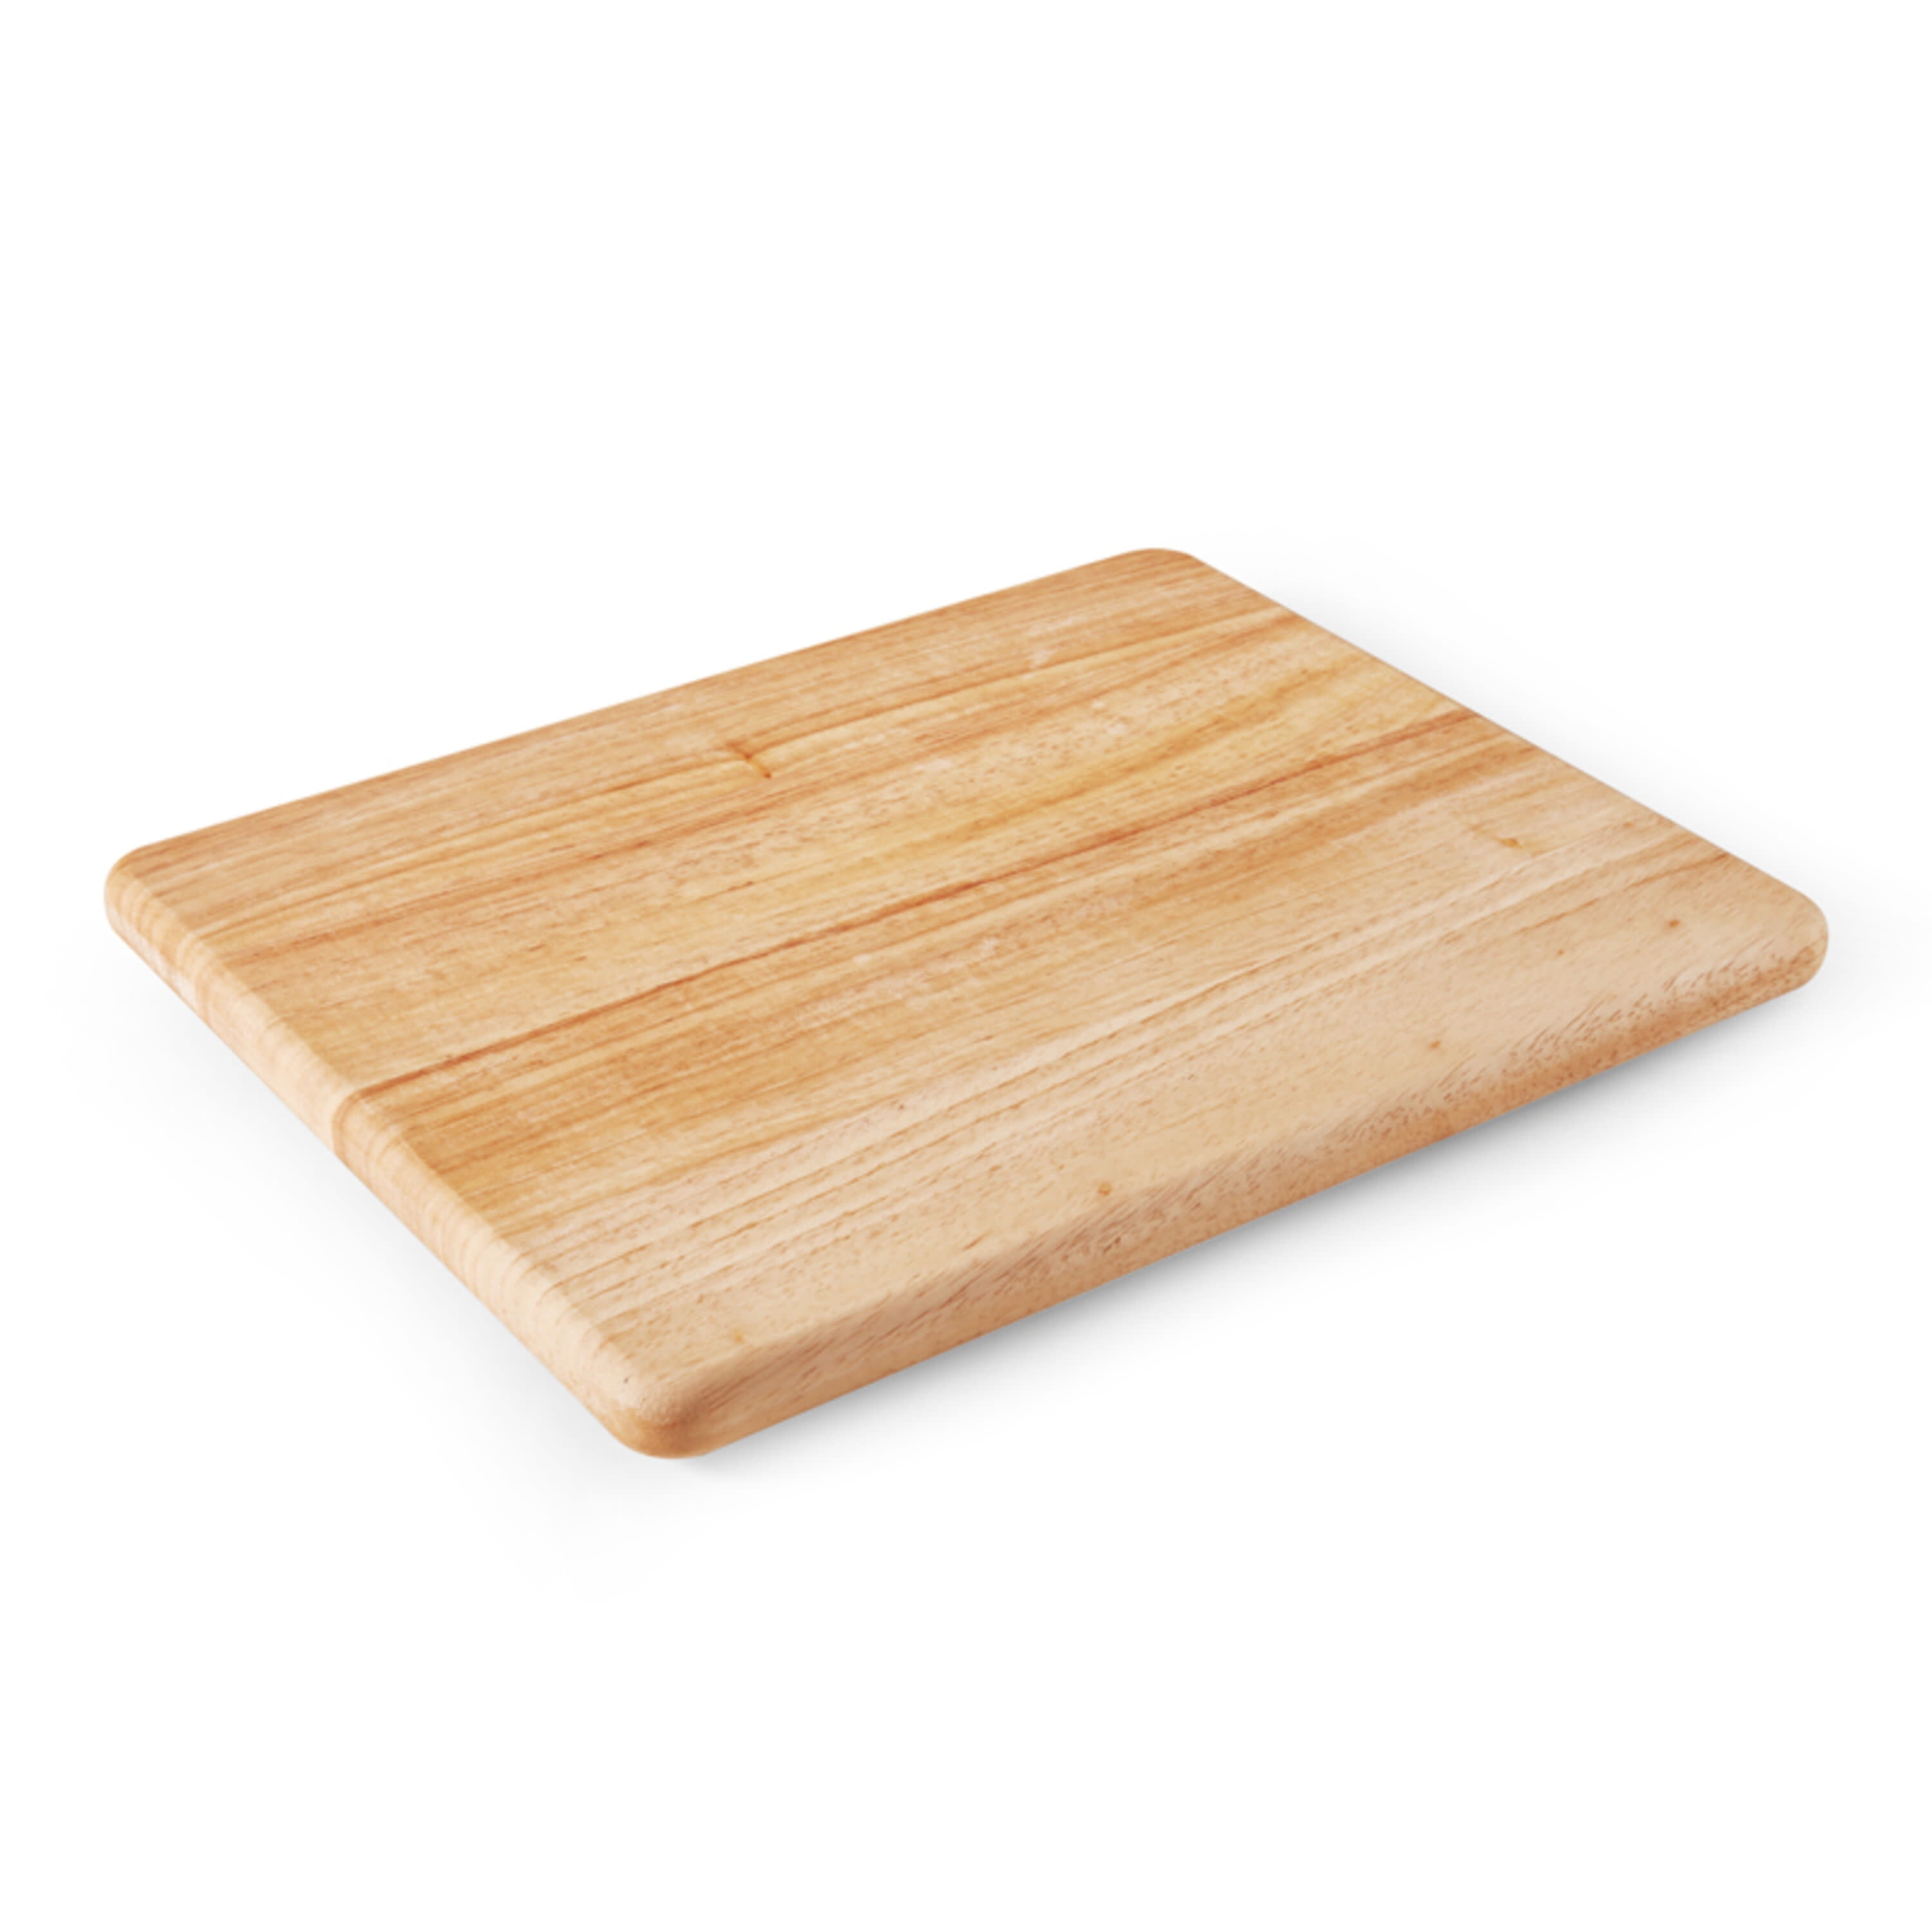 Rubberwood Rectangular Wooden Chopping Board│Kitchen Food Cutting Board│S/M/L 